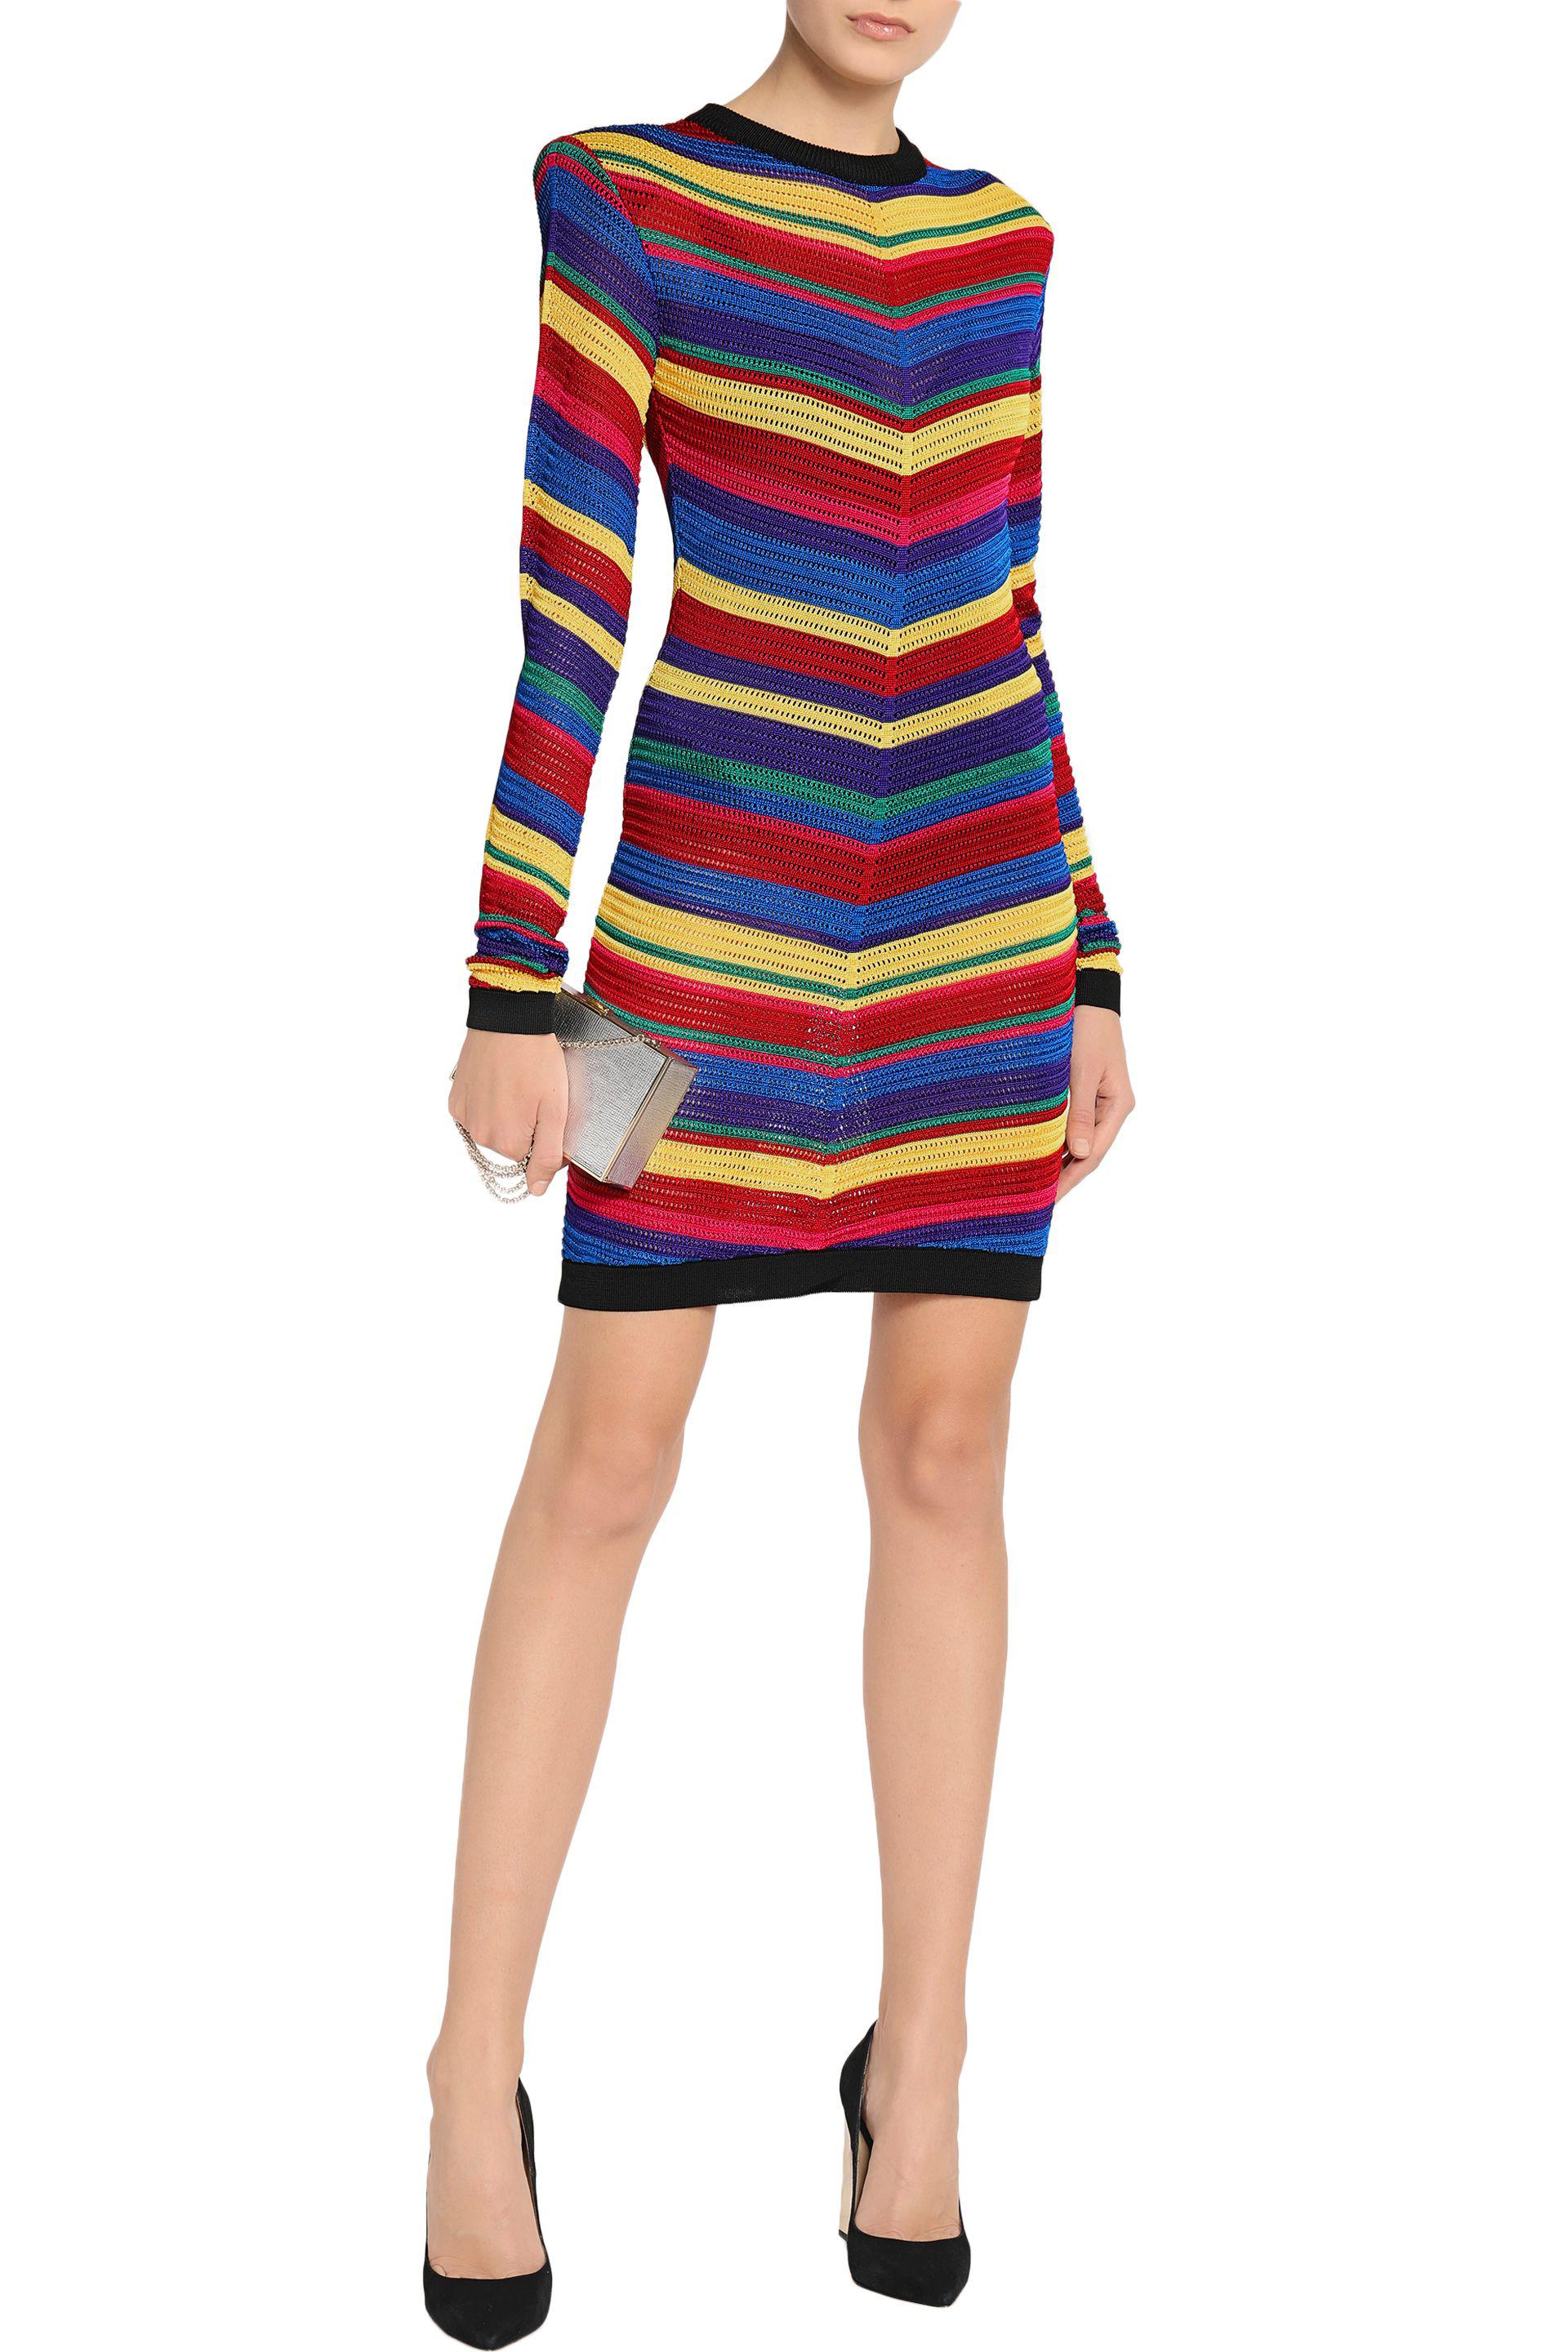 Balmain Striped Crocheted Mini Dress - Lyst